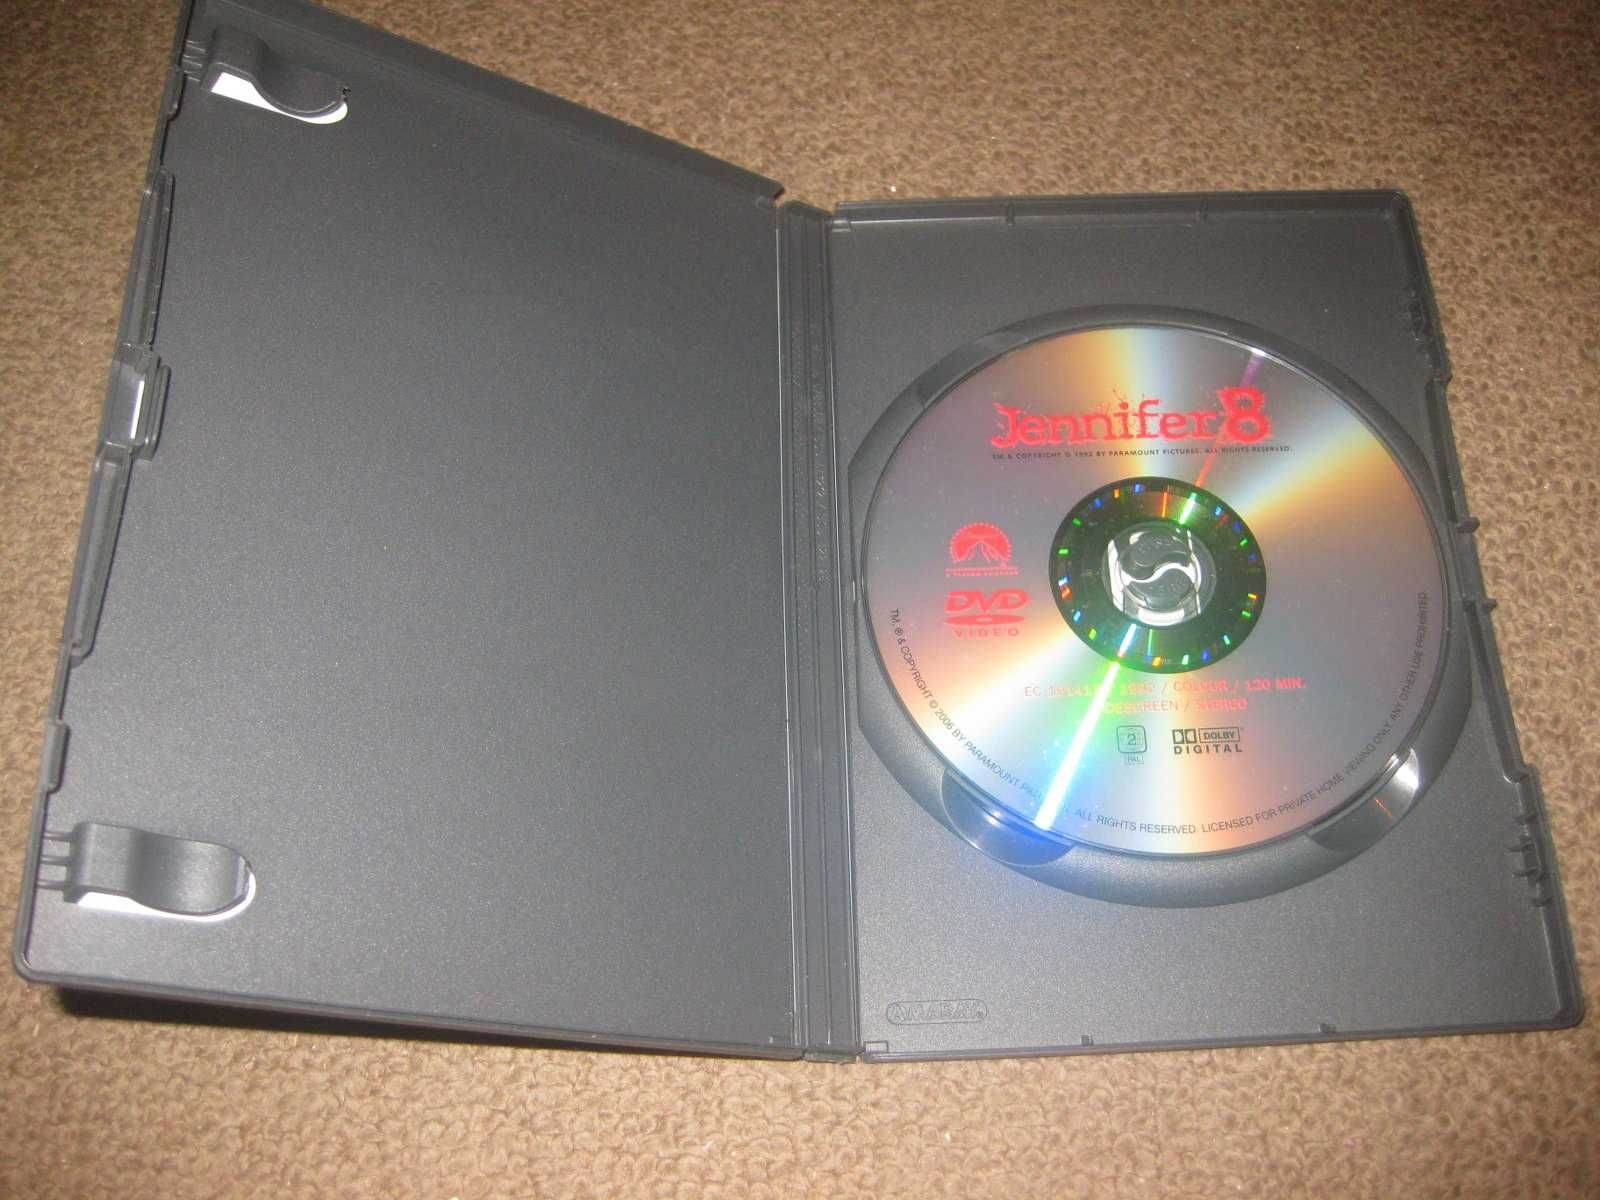 DVD "Jennifer 8" com Andy Garcia